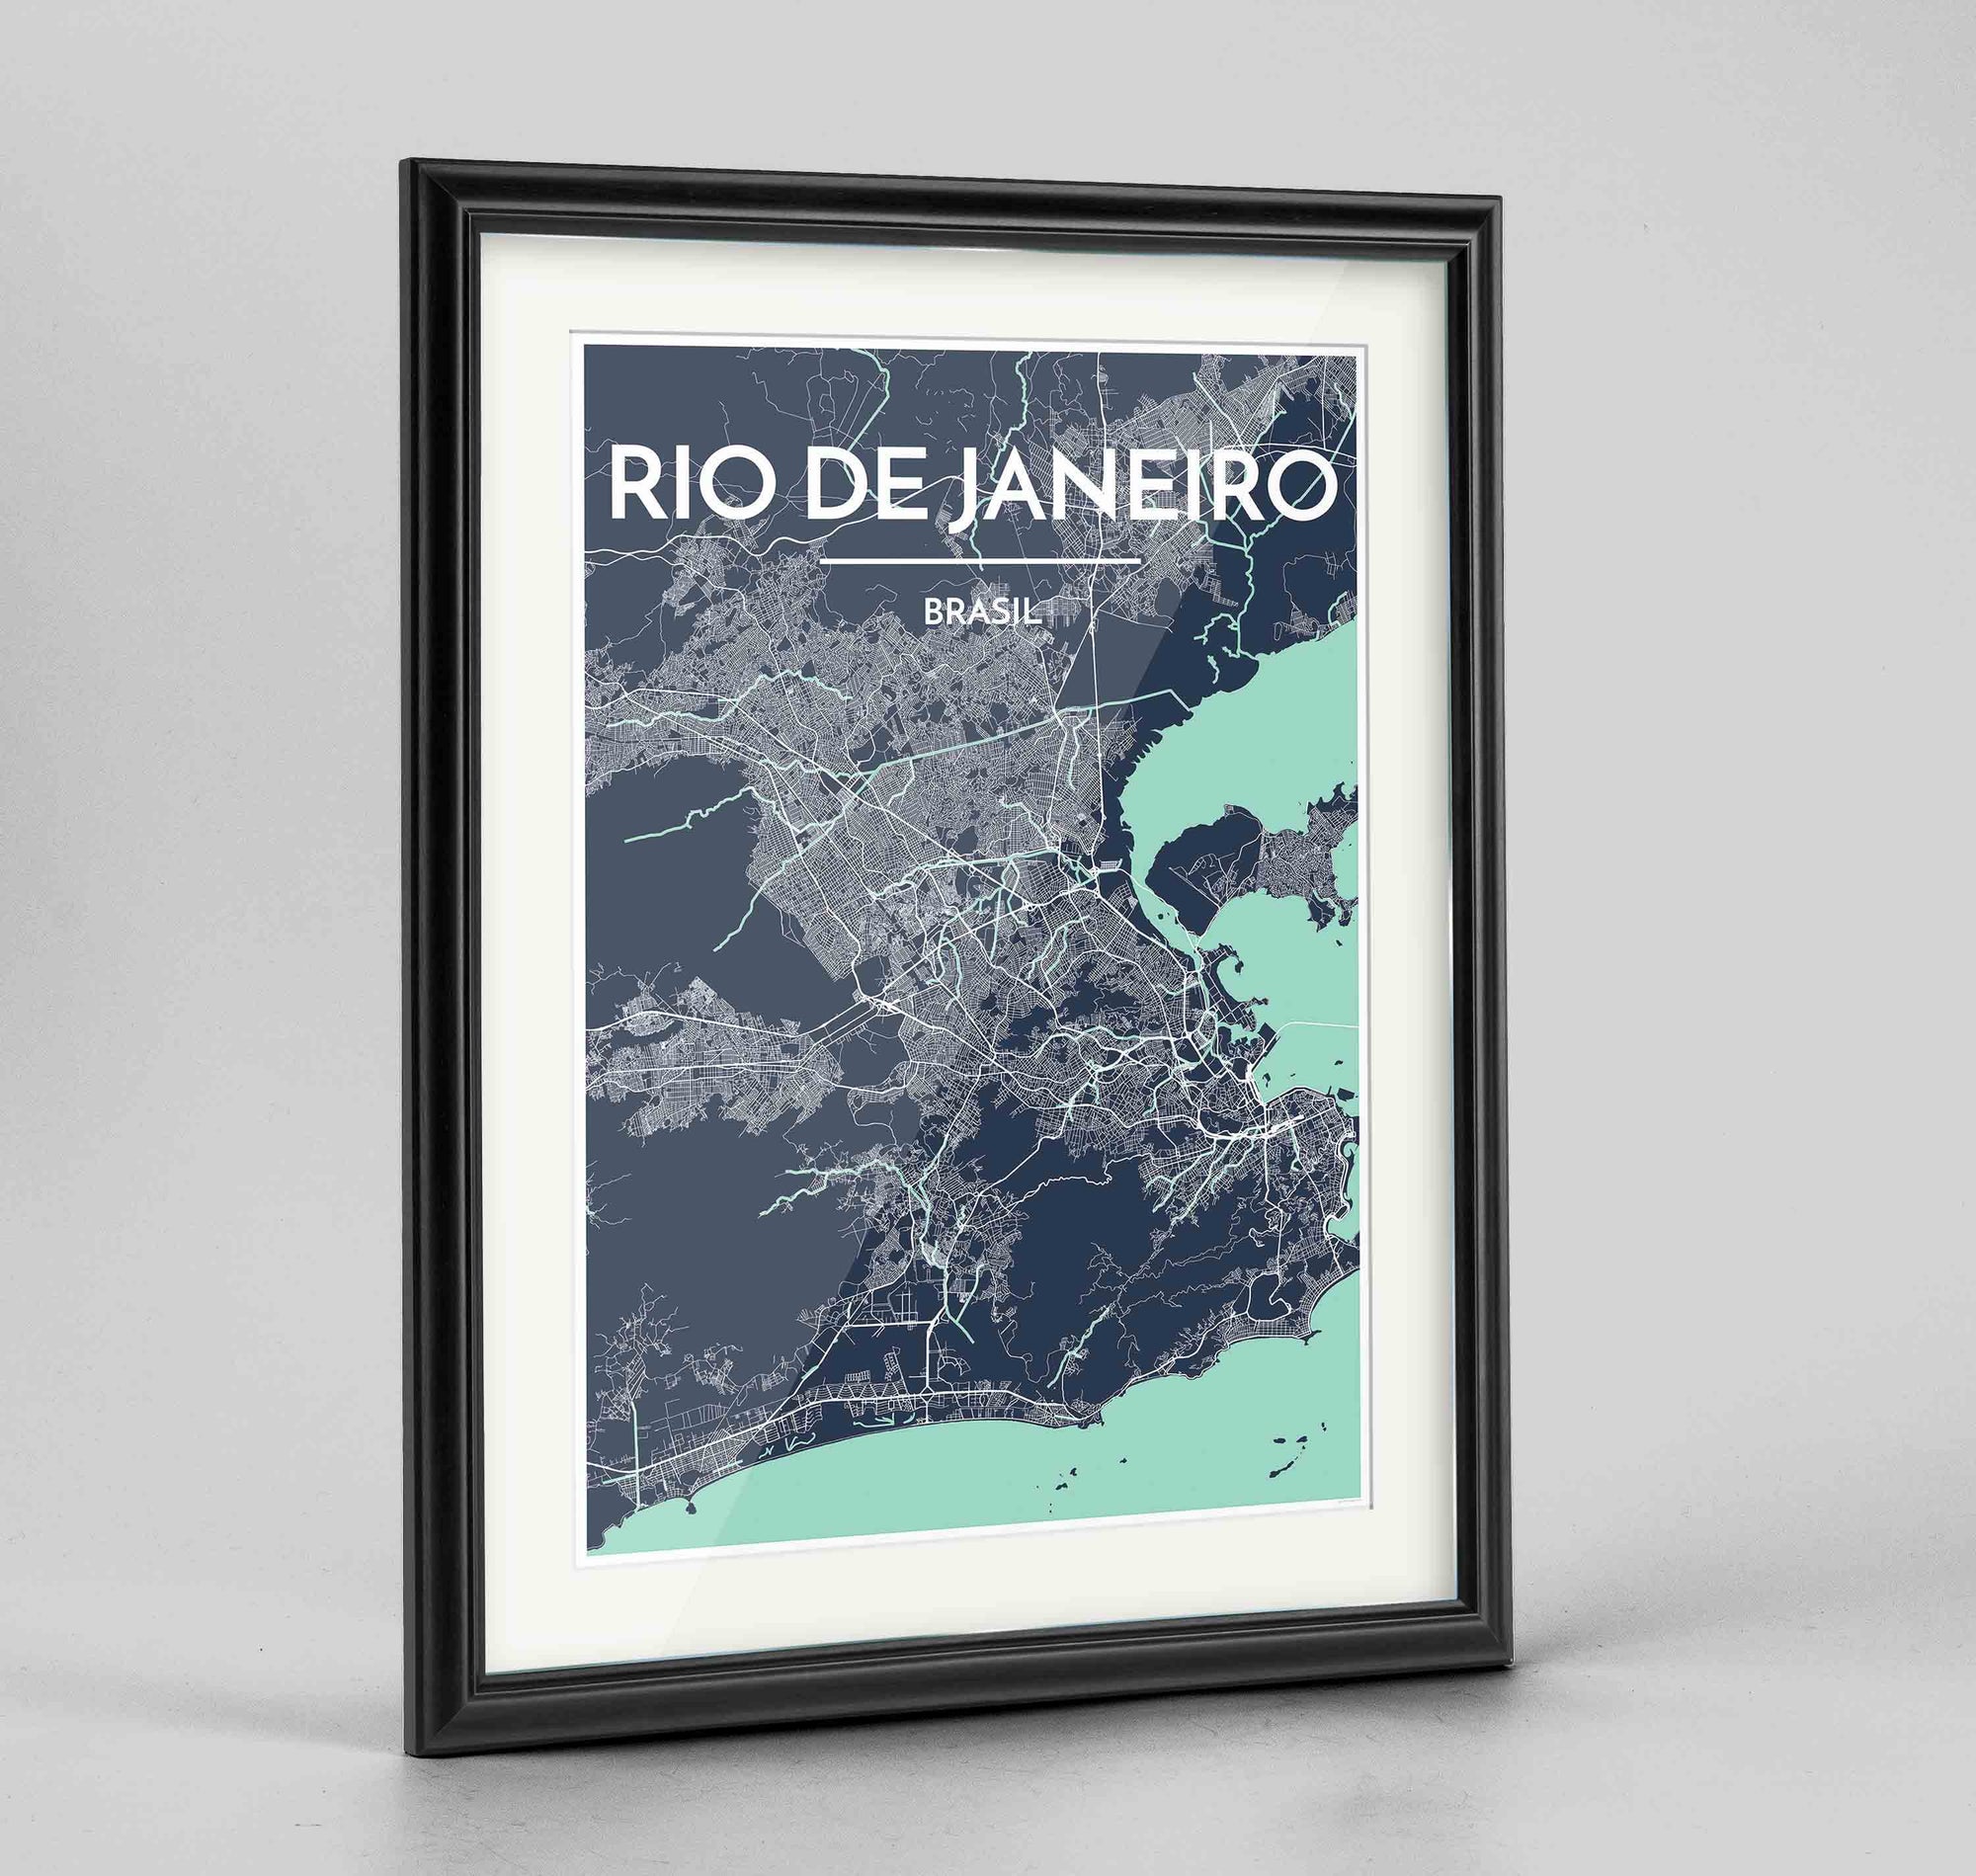 Framed Rio de Janeiro Map Art Print 24x36" Traditional Black frame Point Two Design Group